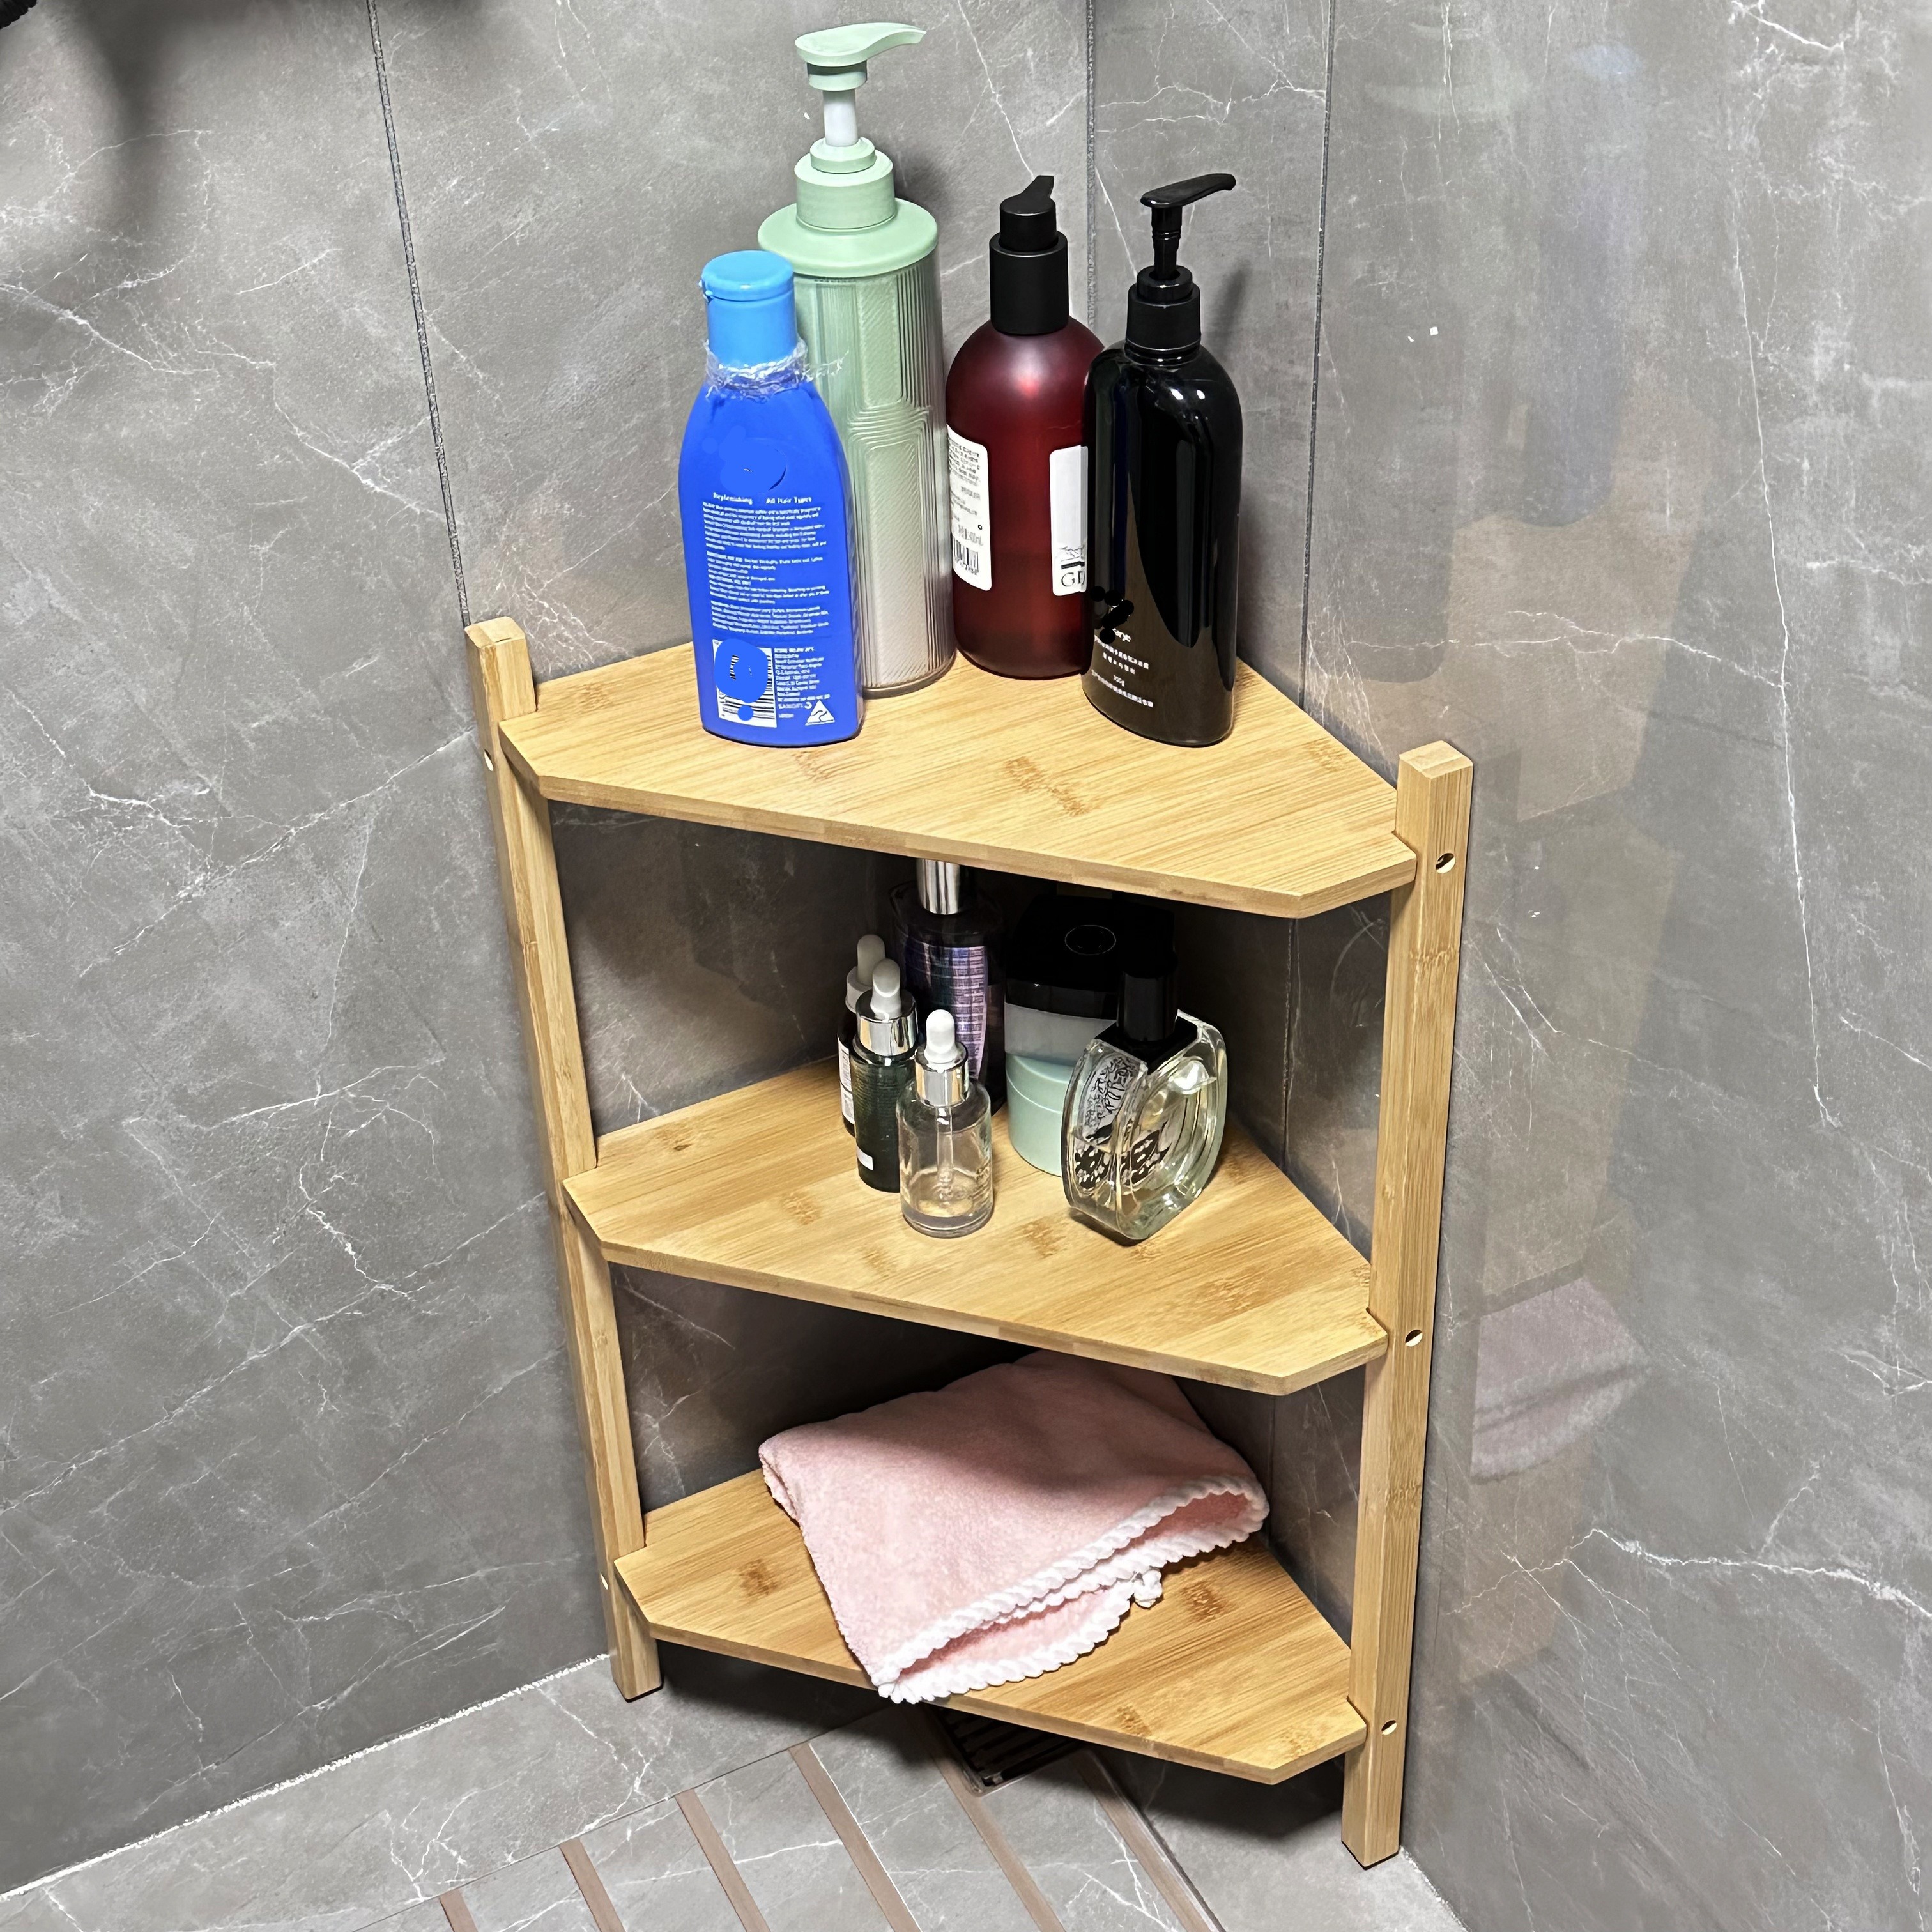 3 Tier Corner Shower Shelf Corner Waterproof for Bathroom Storage